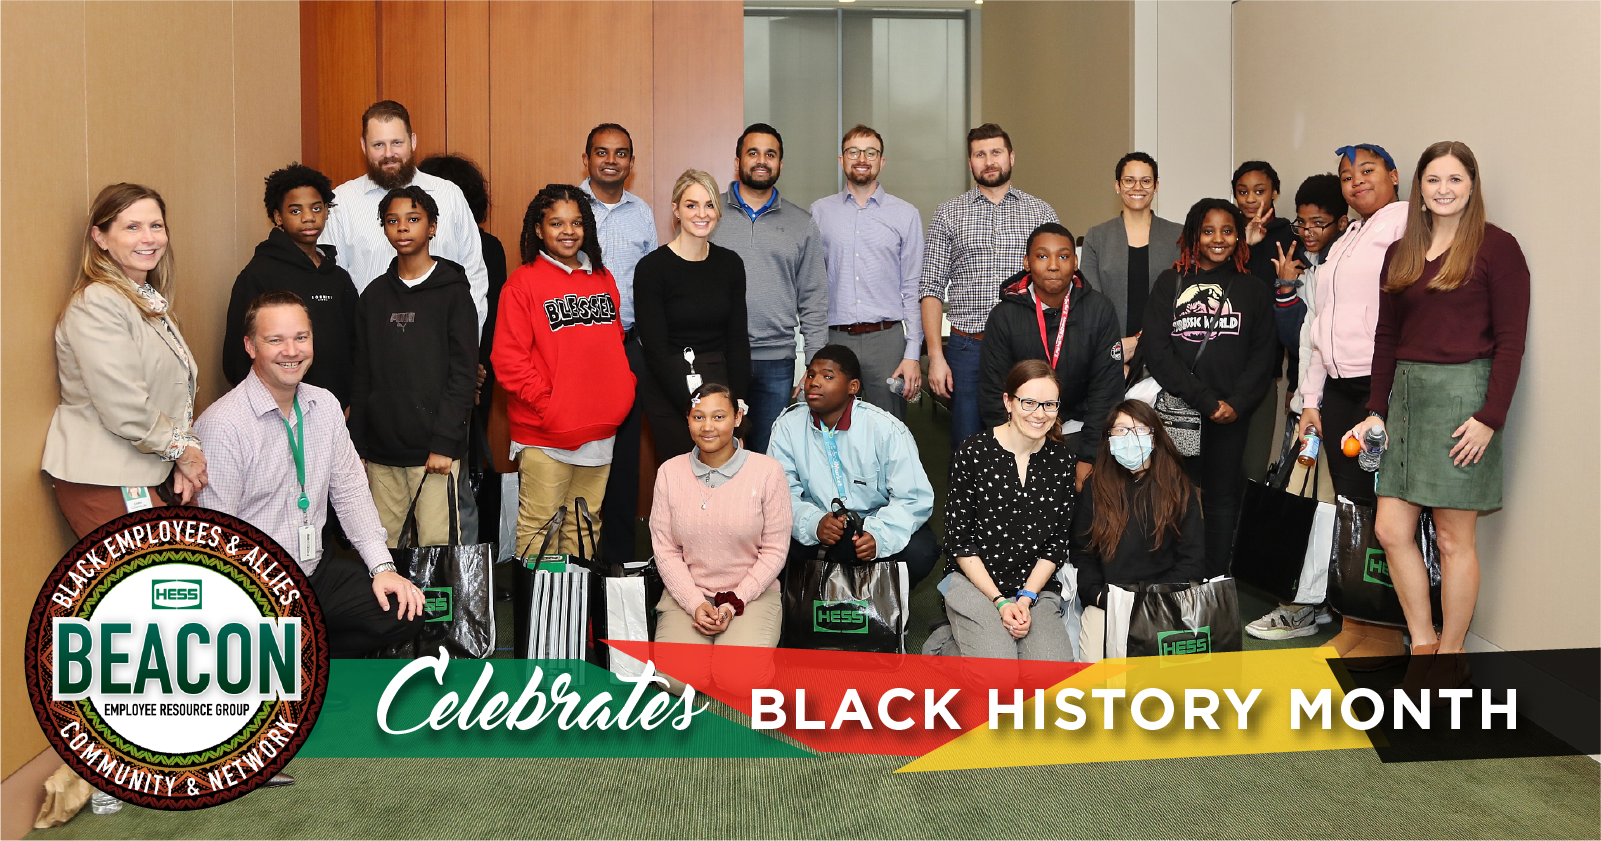 Hess Celebrates Black History Month